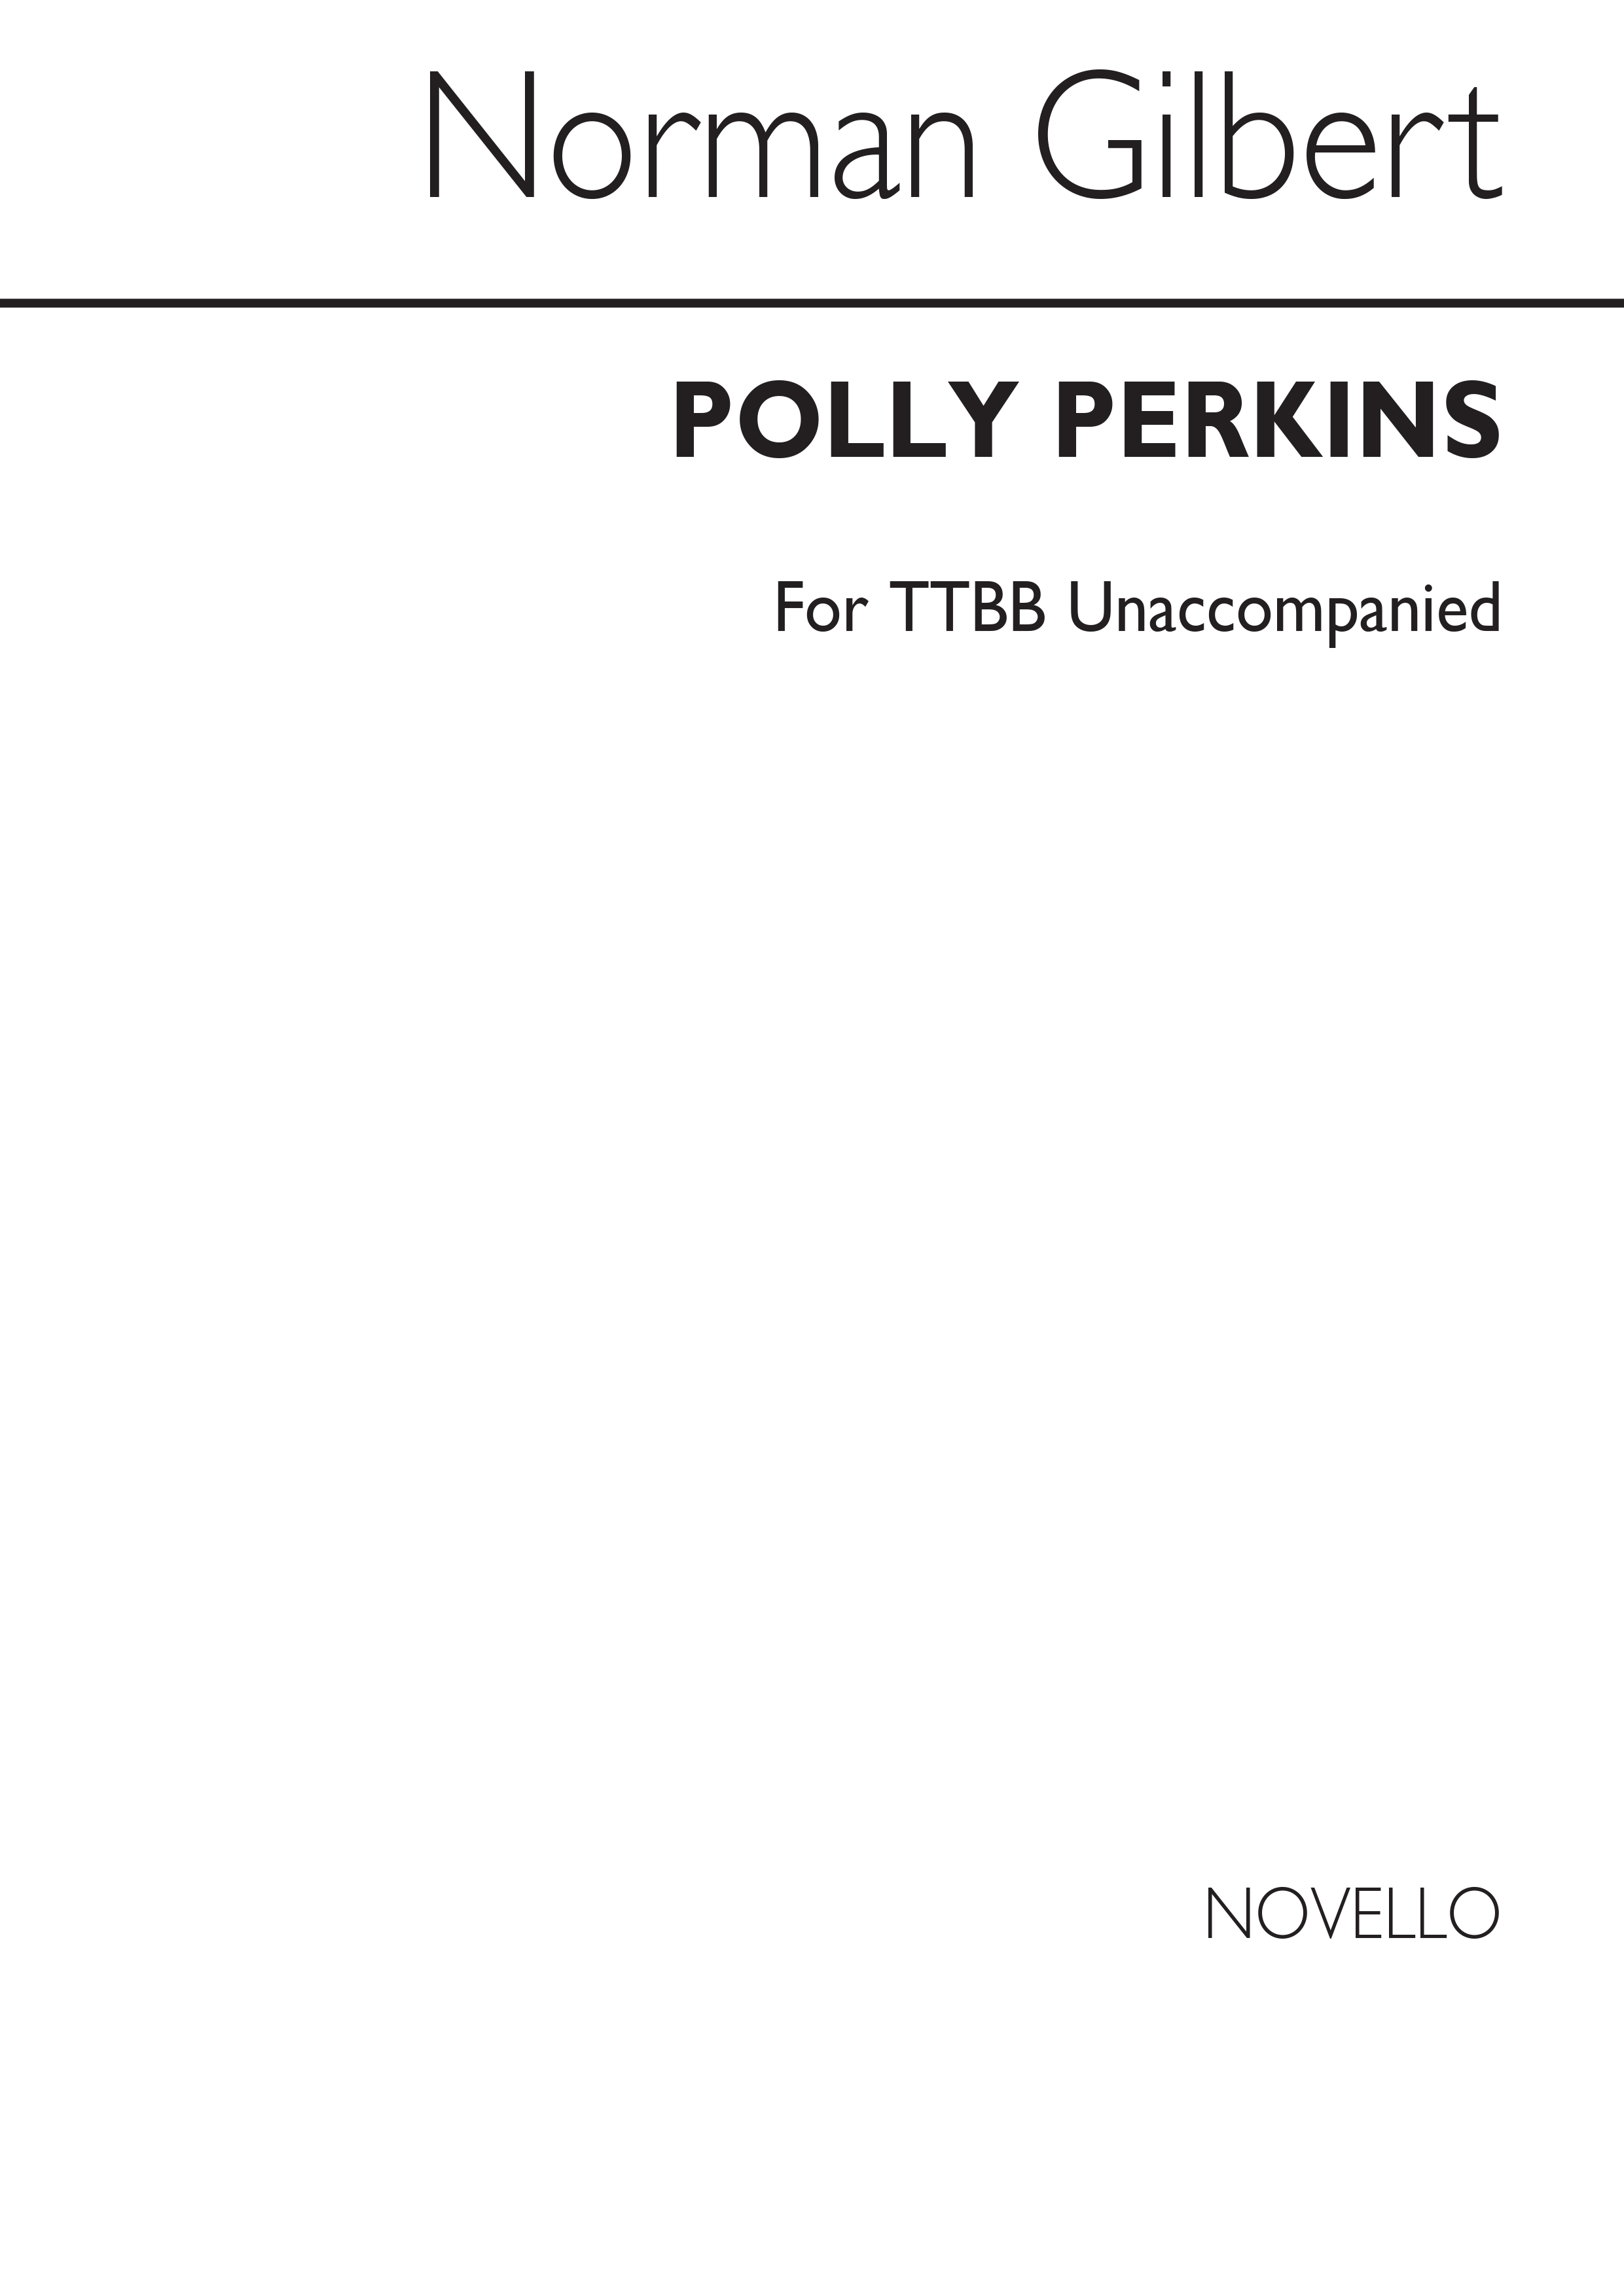 Norman Gilbert: Polly Perkins